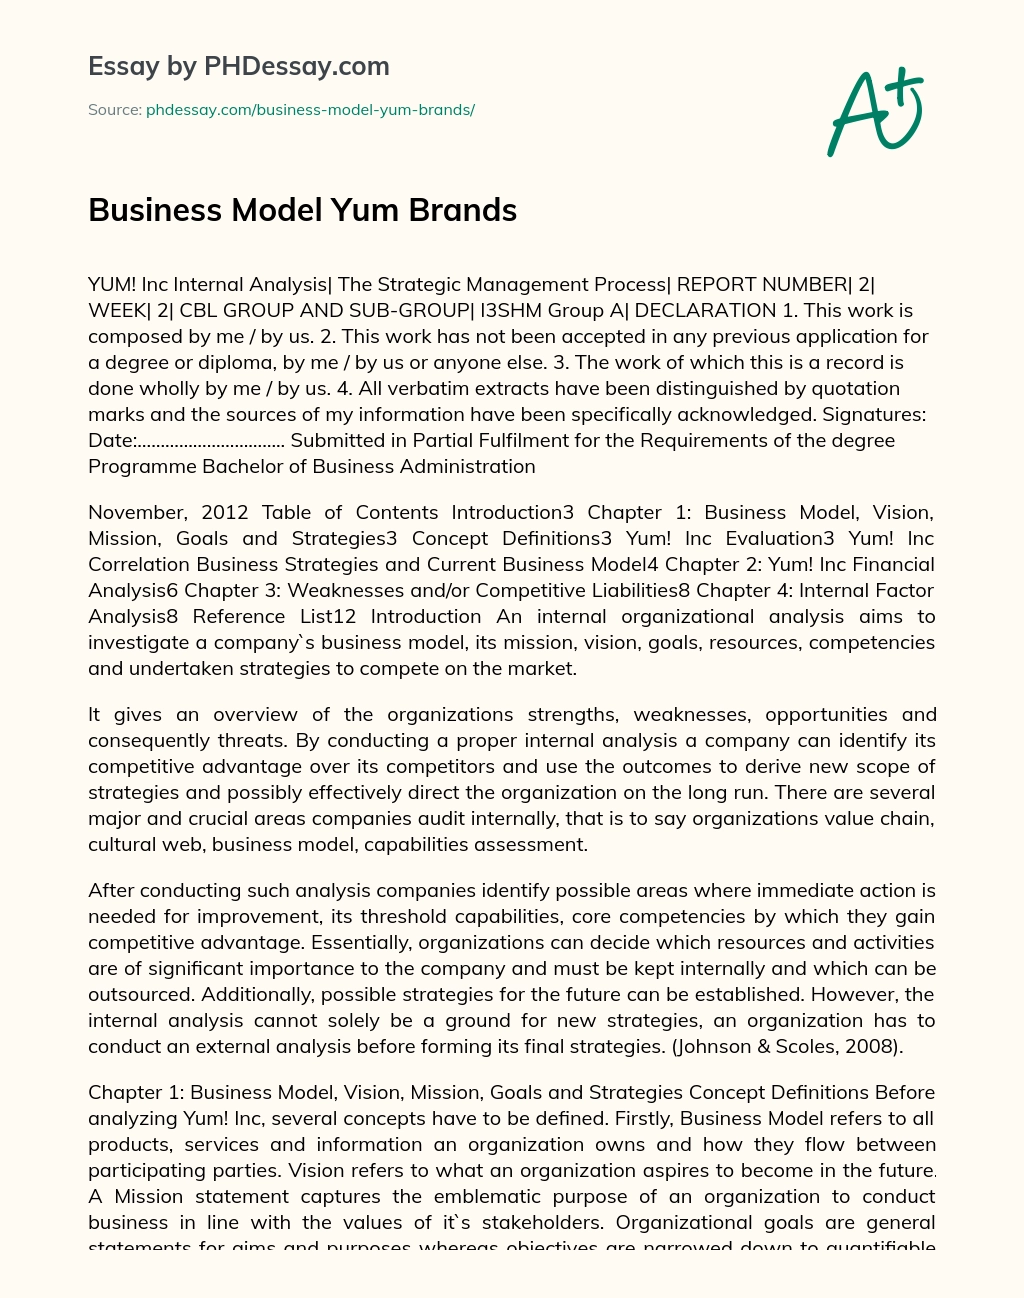 Business Model Yum Brands essay